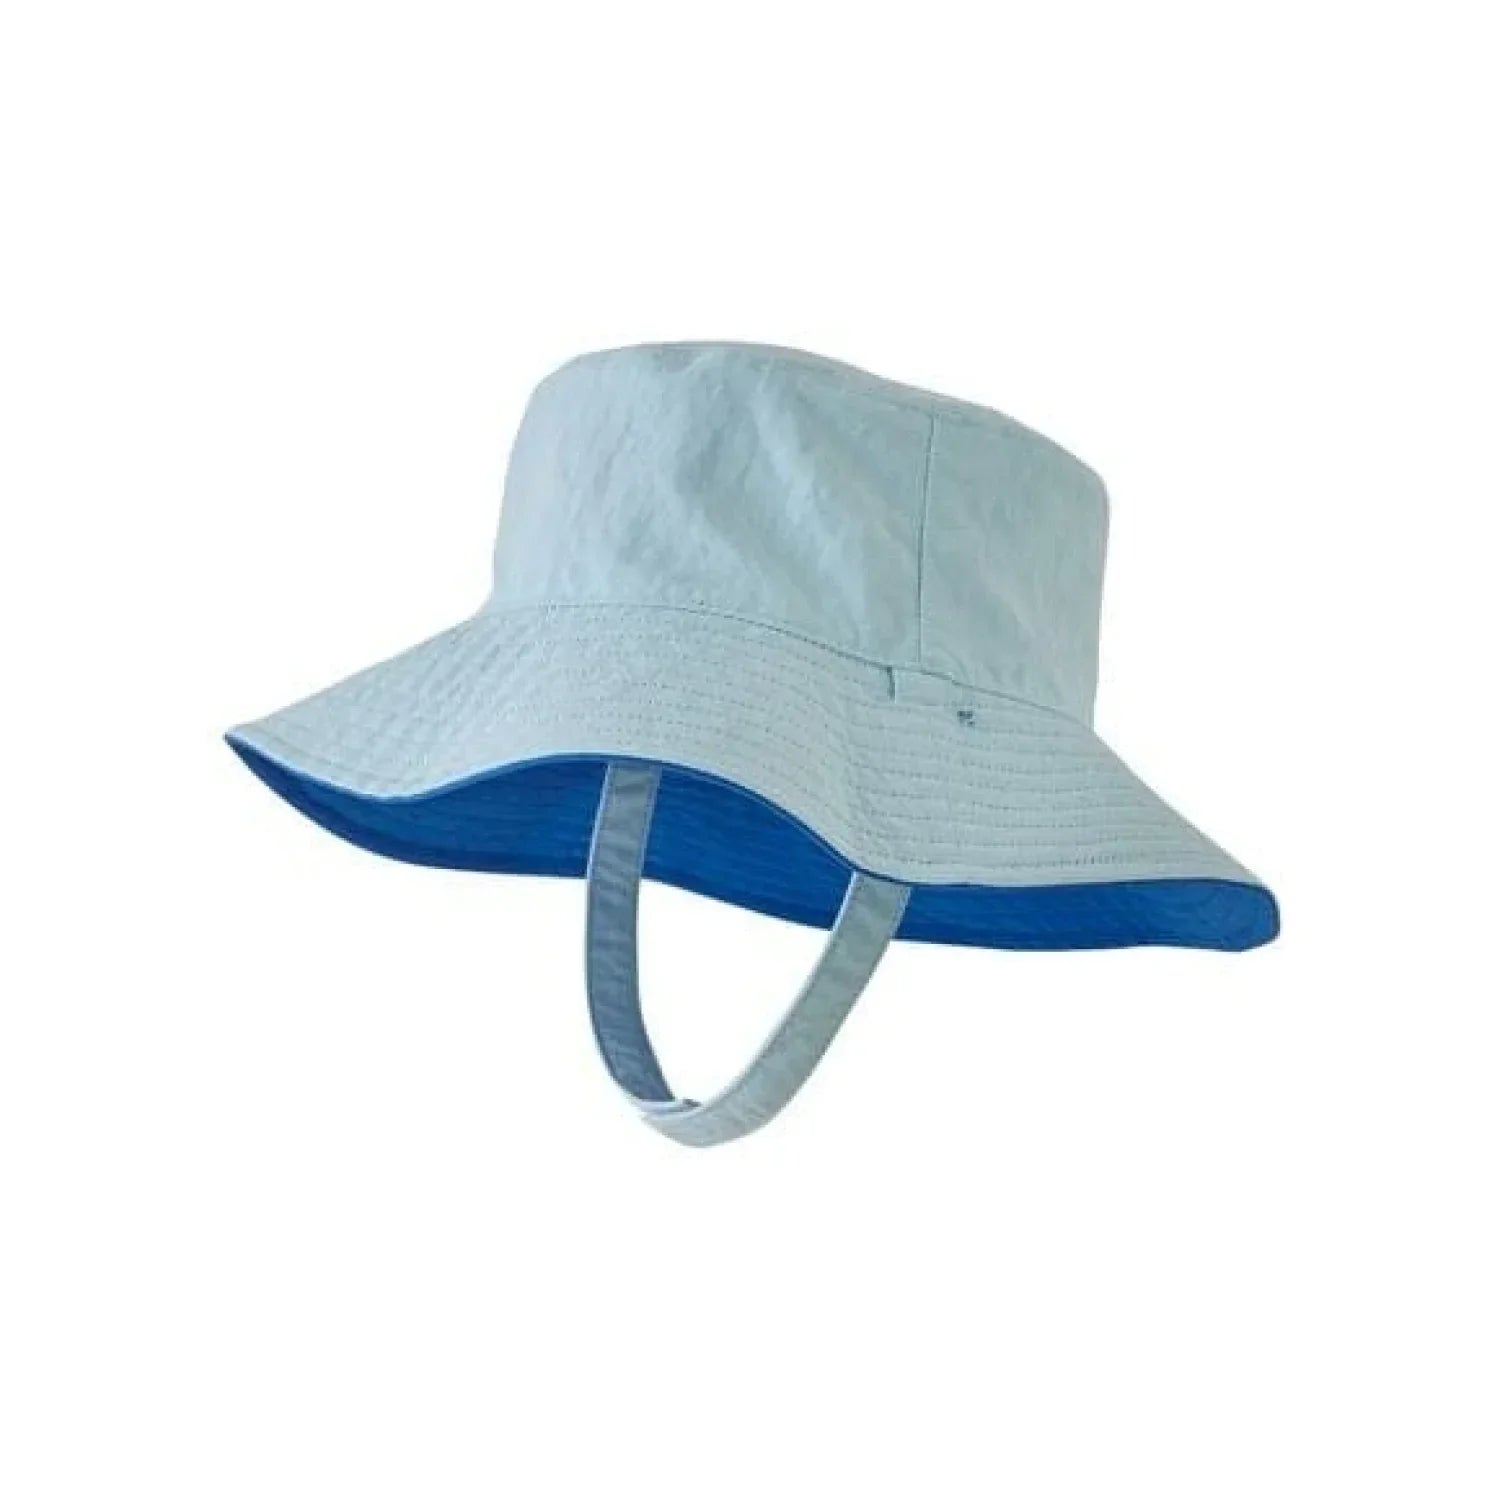 Patagonia HATS - HATS KIDS - HATS KIDS Baby Sun Bucket Hat BYBL BAYOU BLUE